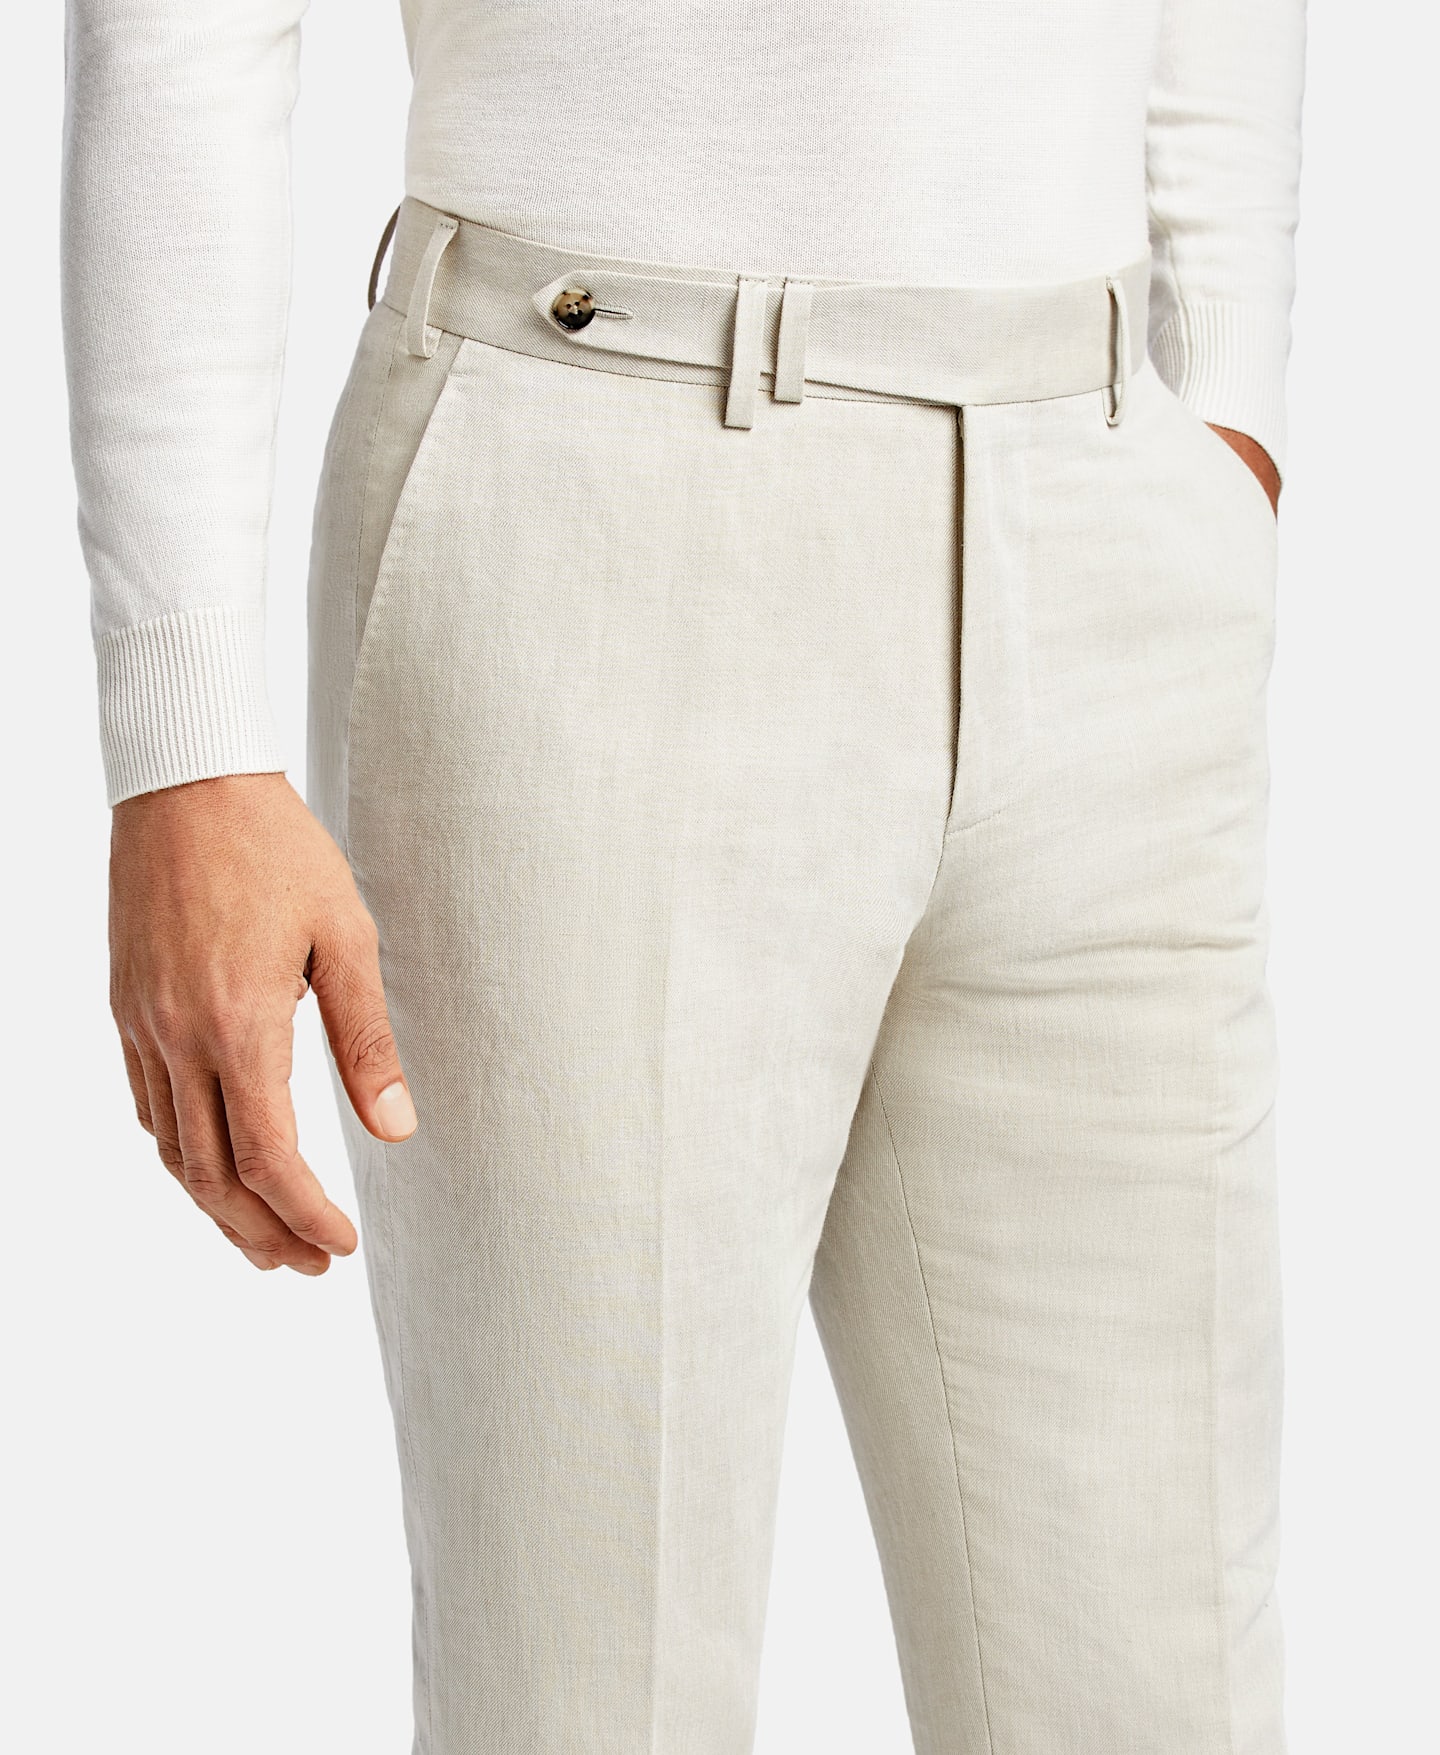 Flat front pocket on off-white linen pants.